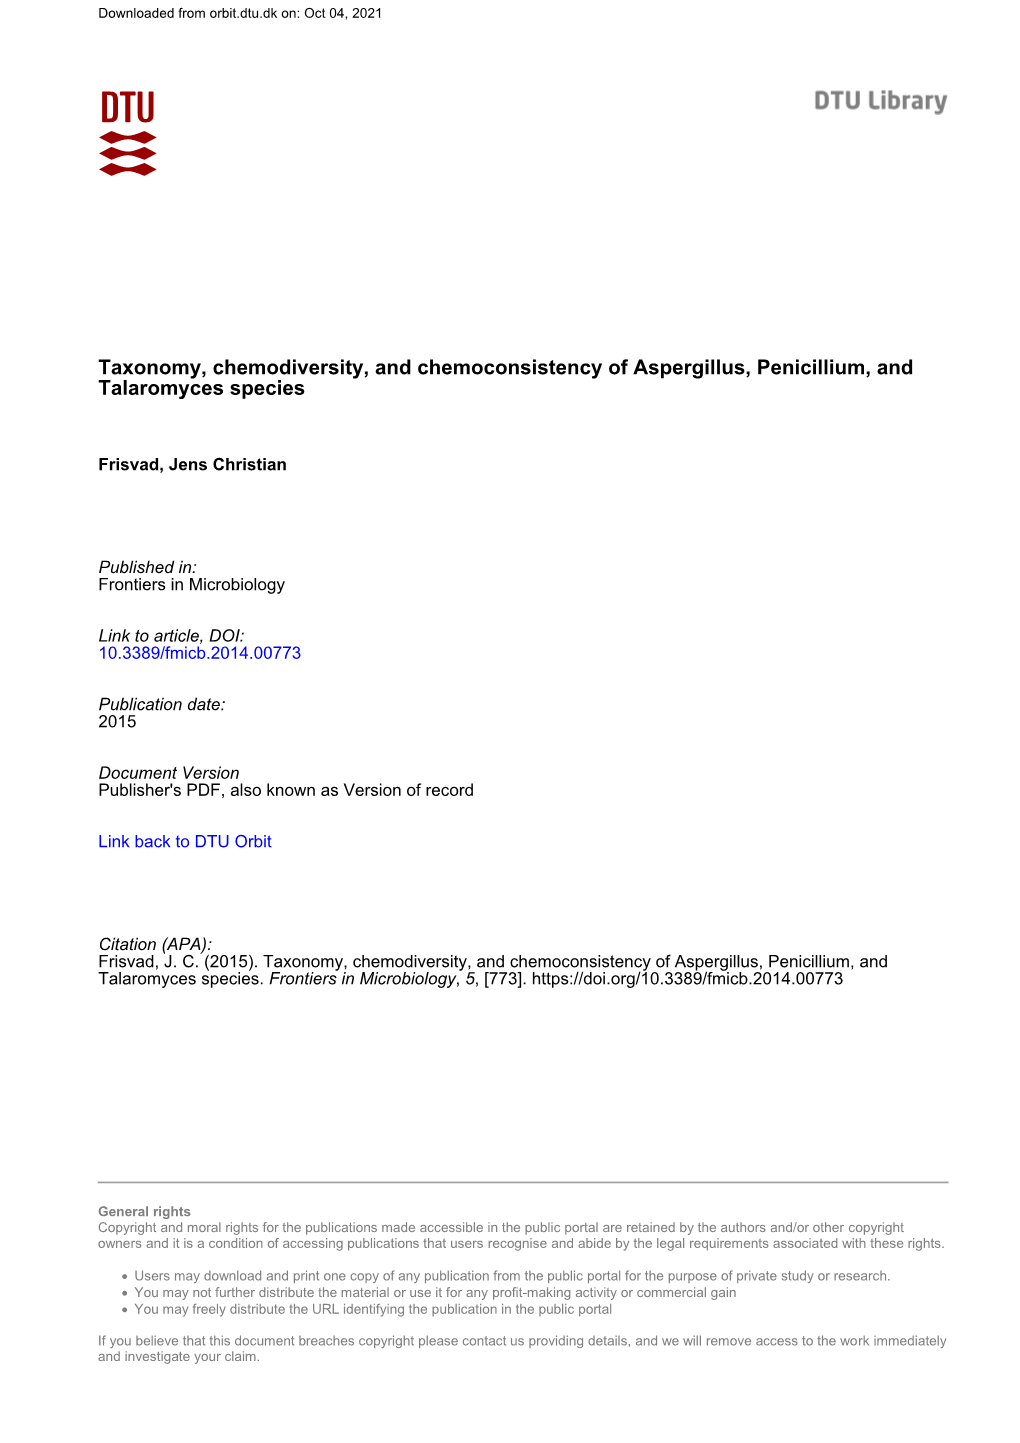 Taxonomy, Chemodiversity, and Chemoconsistency of Aspergillus, Penicillium, and Talaromyces Species